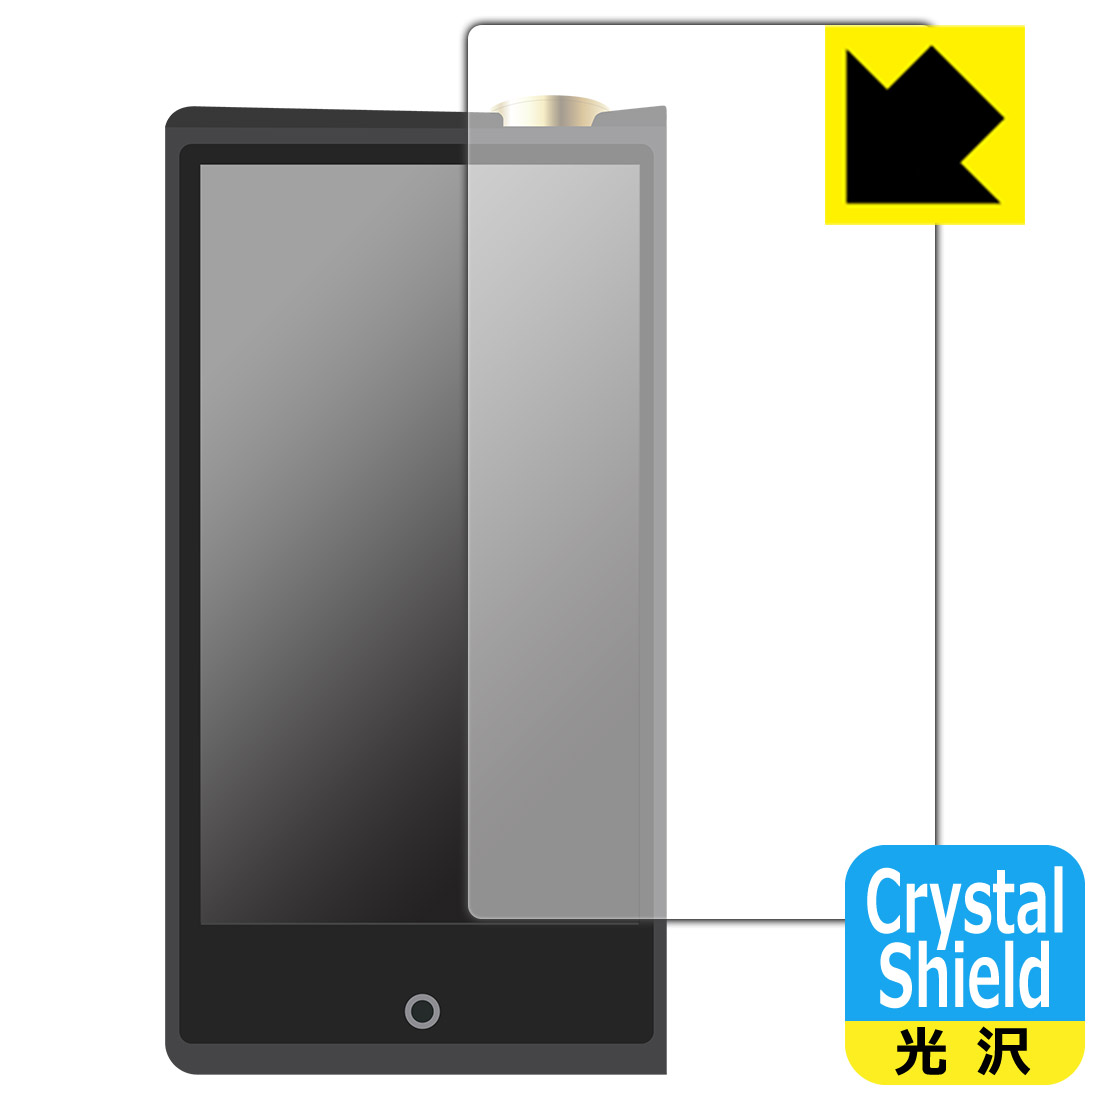 Crystal Shield【光沢】保護フィルム Cayin N8ii (前面のみ) 日本製 自社製造直販